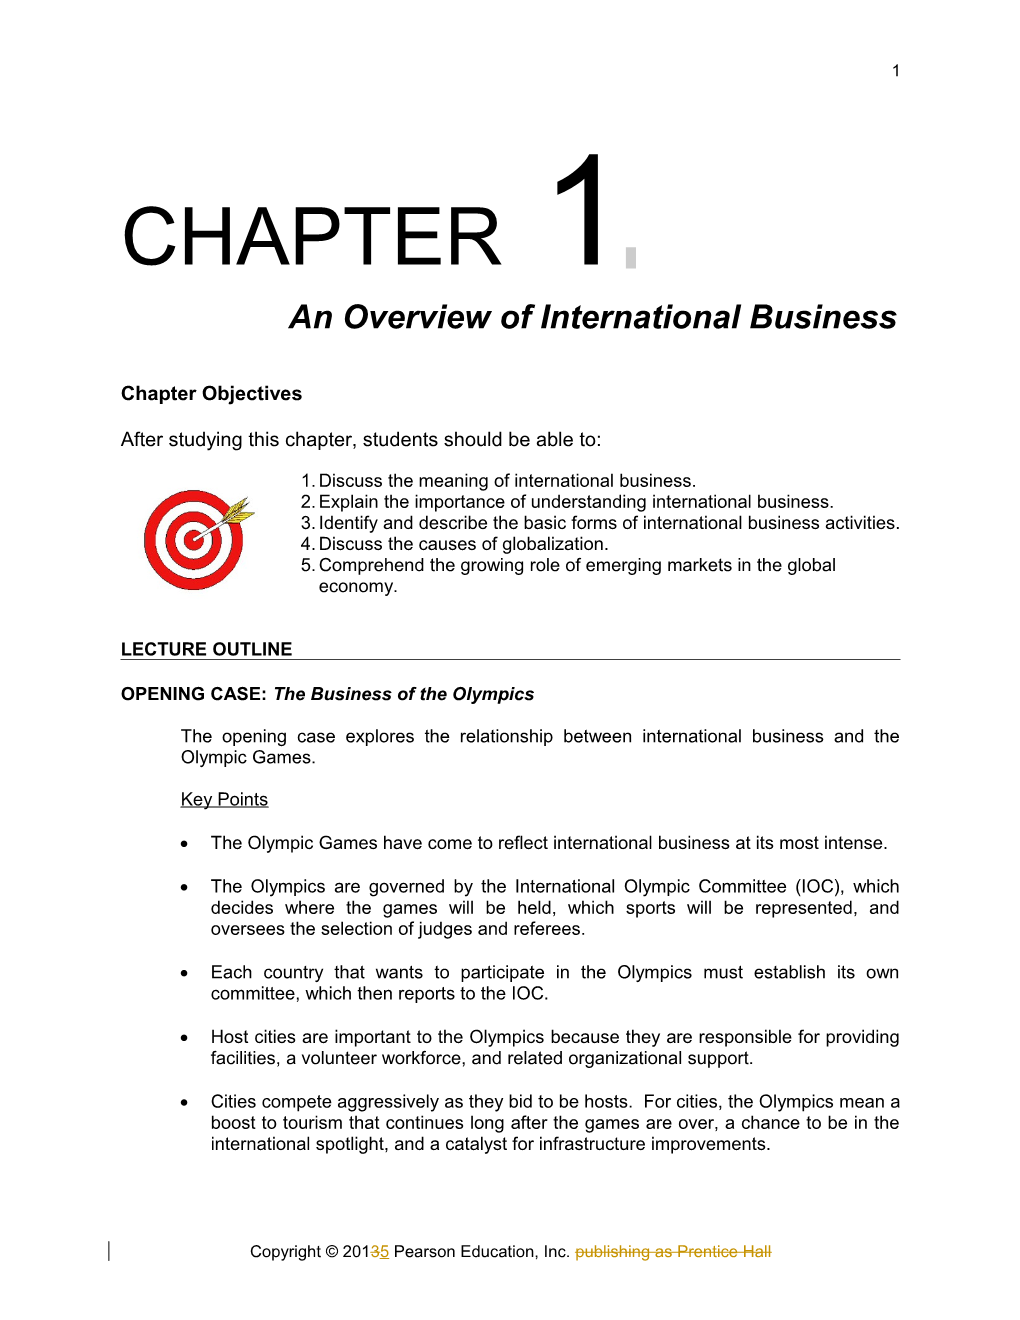 An Overview of International Business